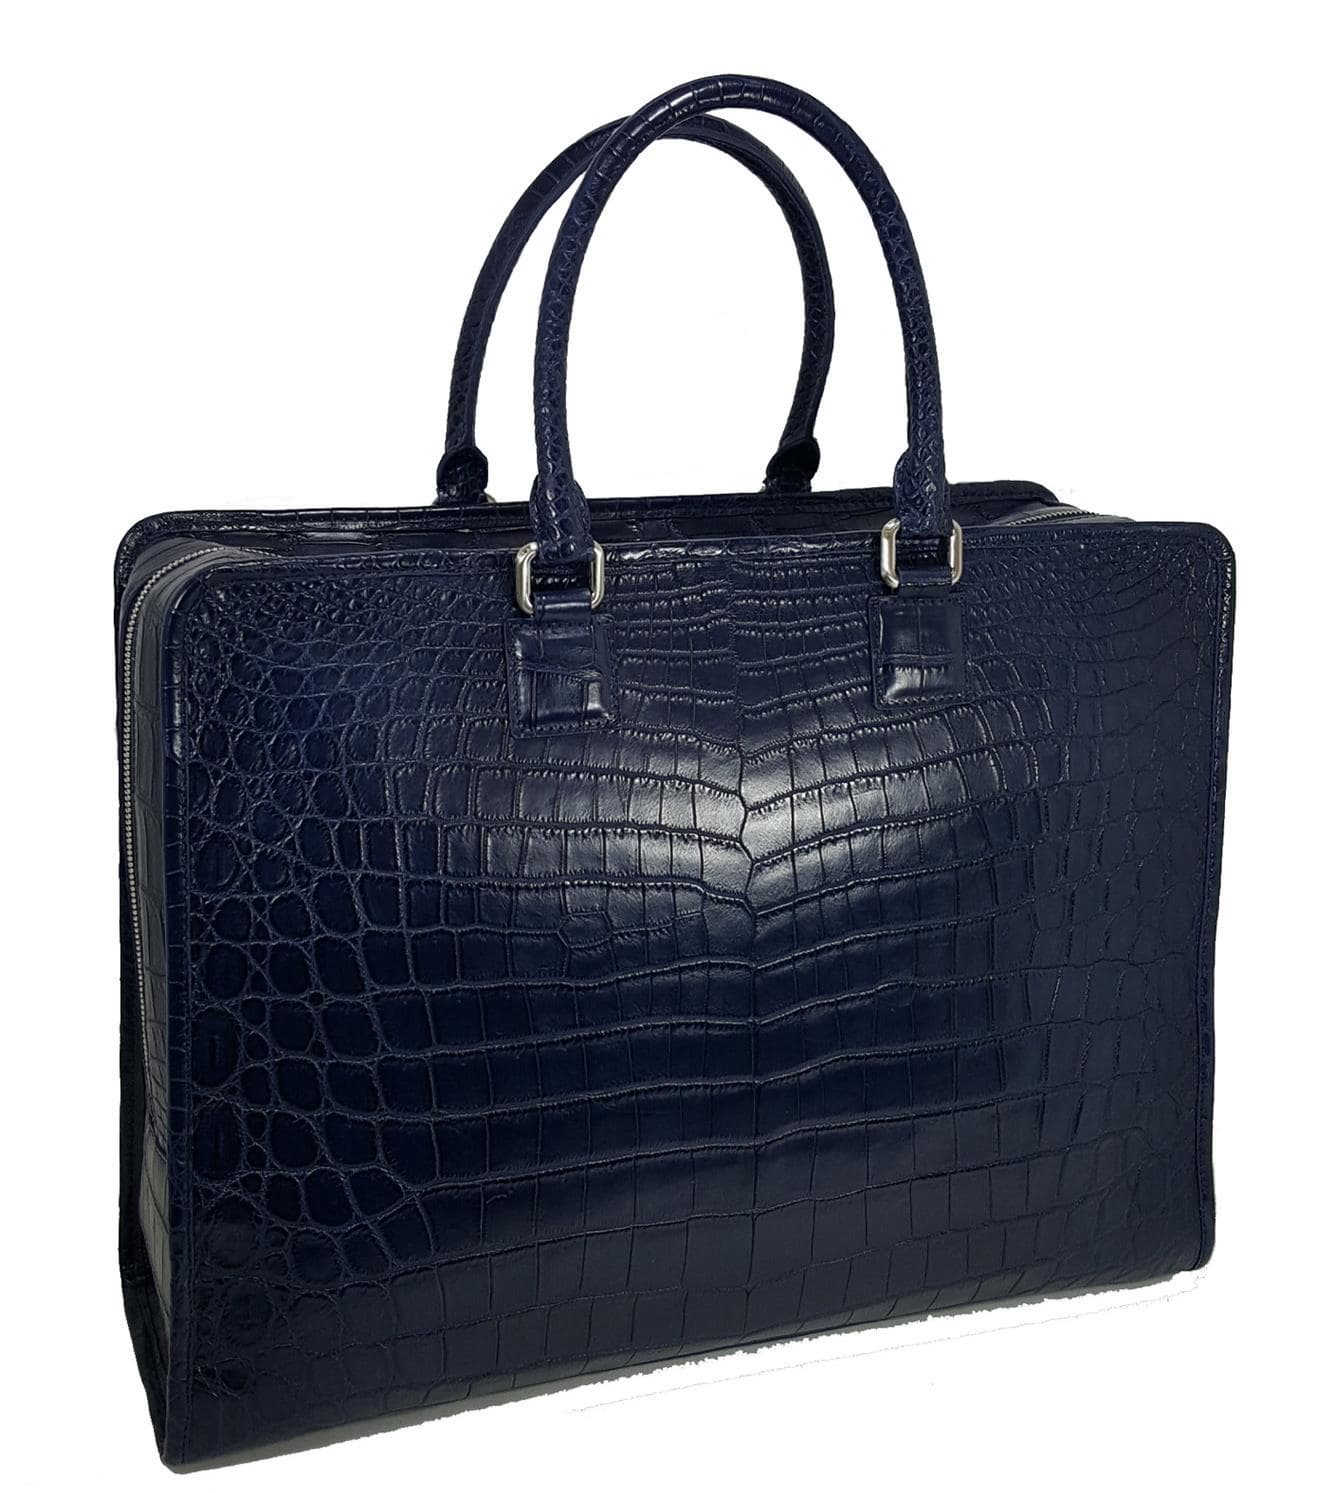 Luxury Crocodile Leather Bag for Men